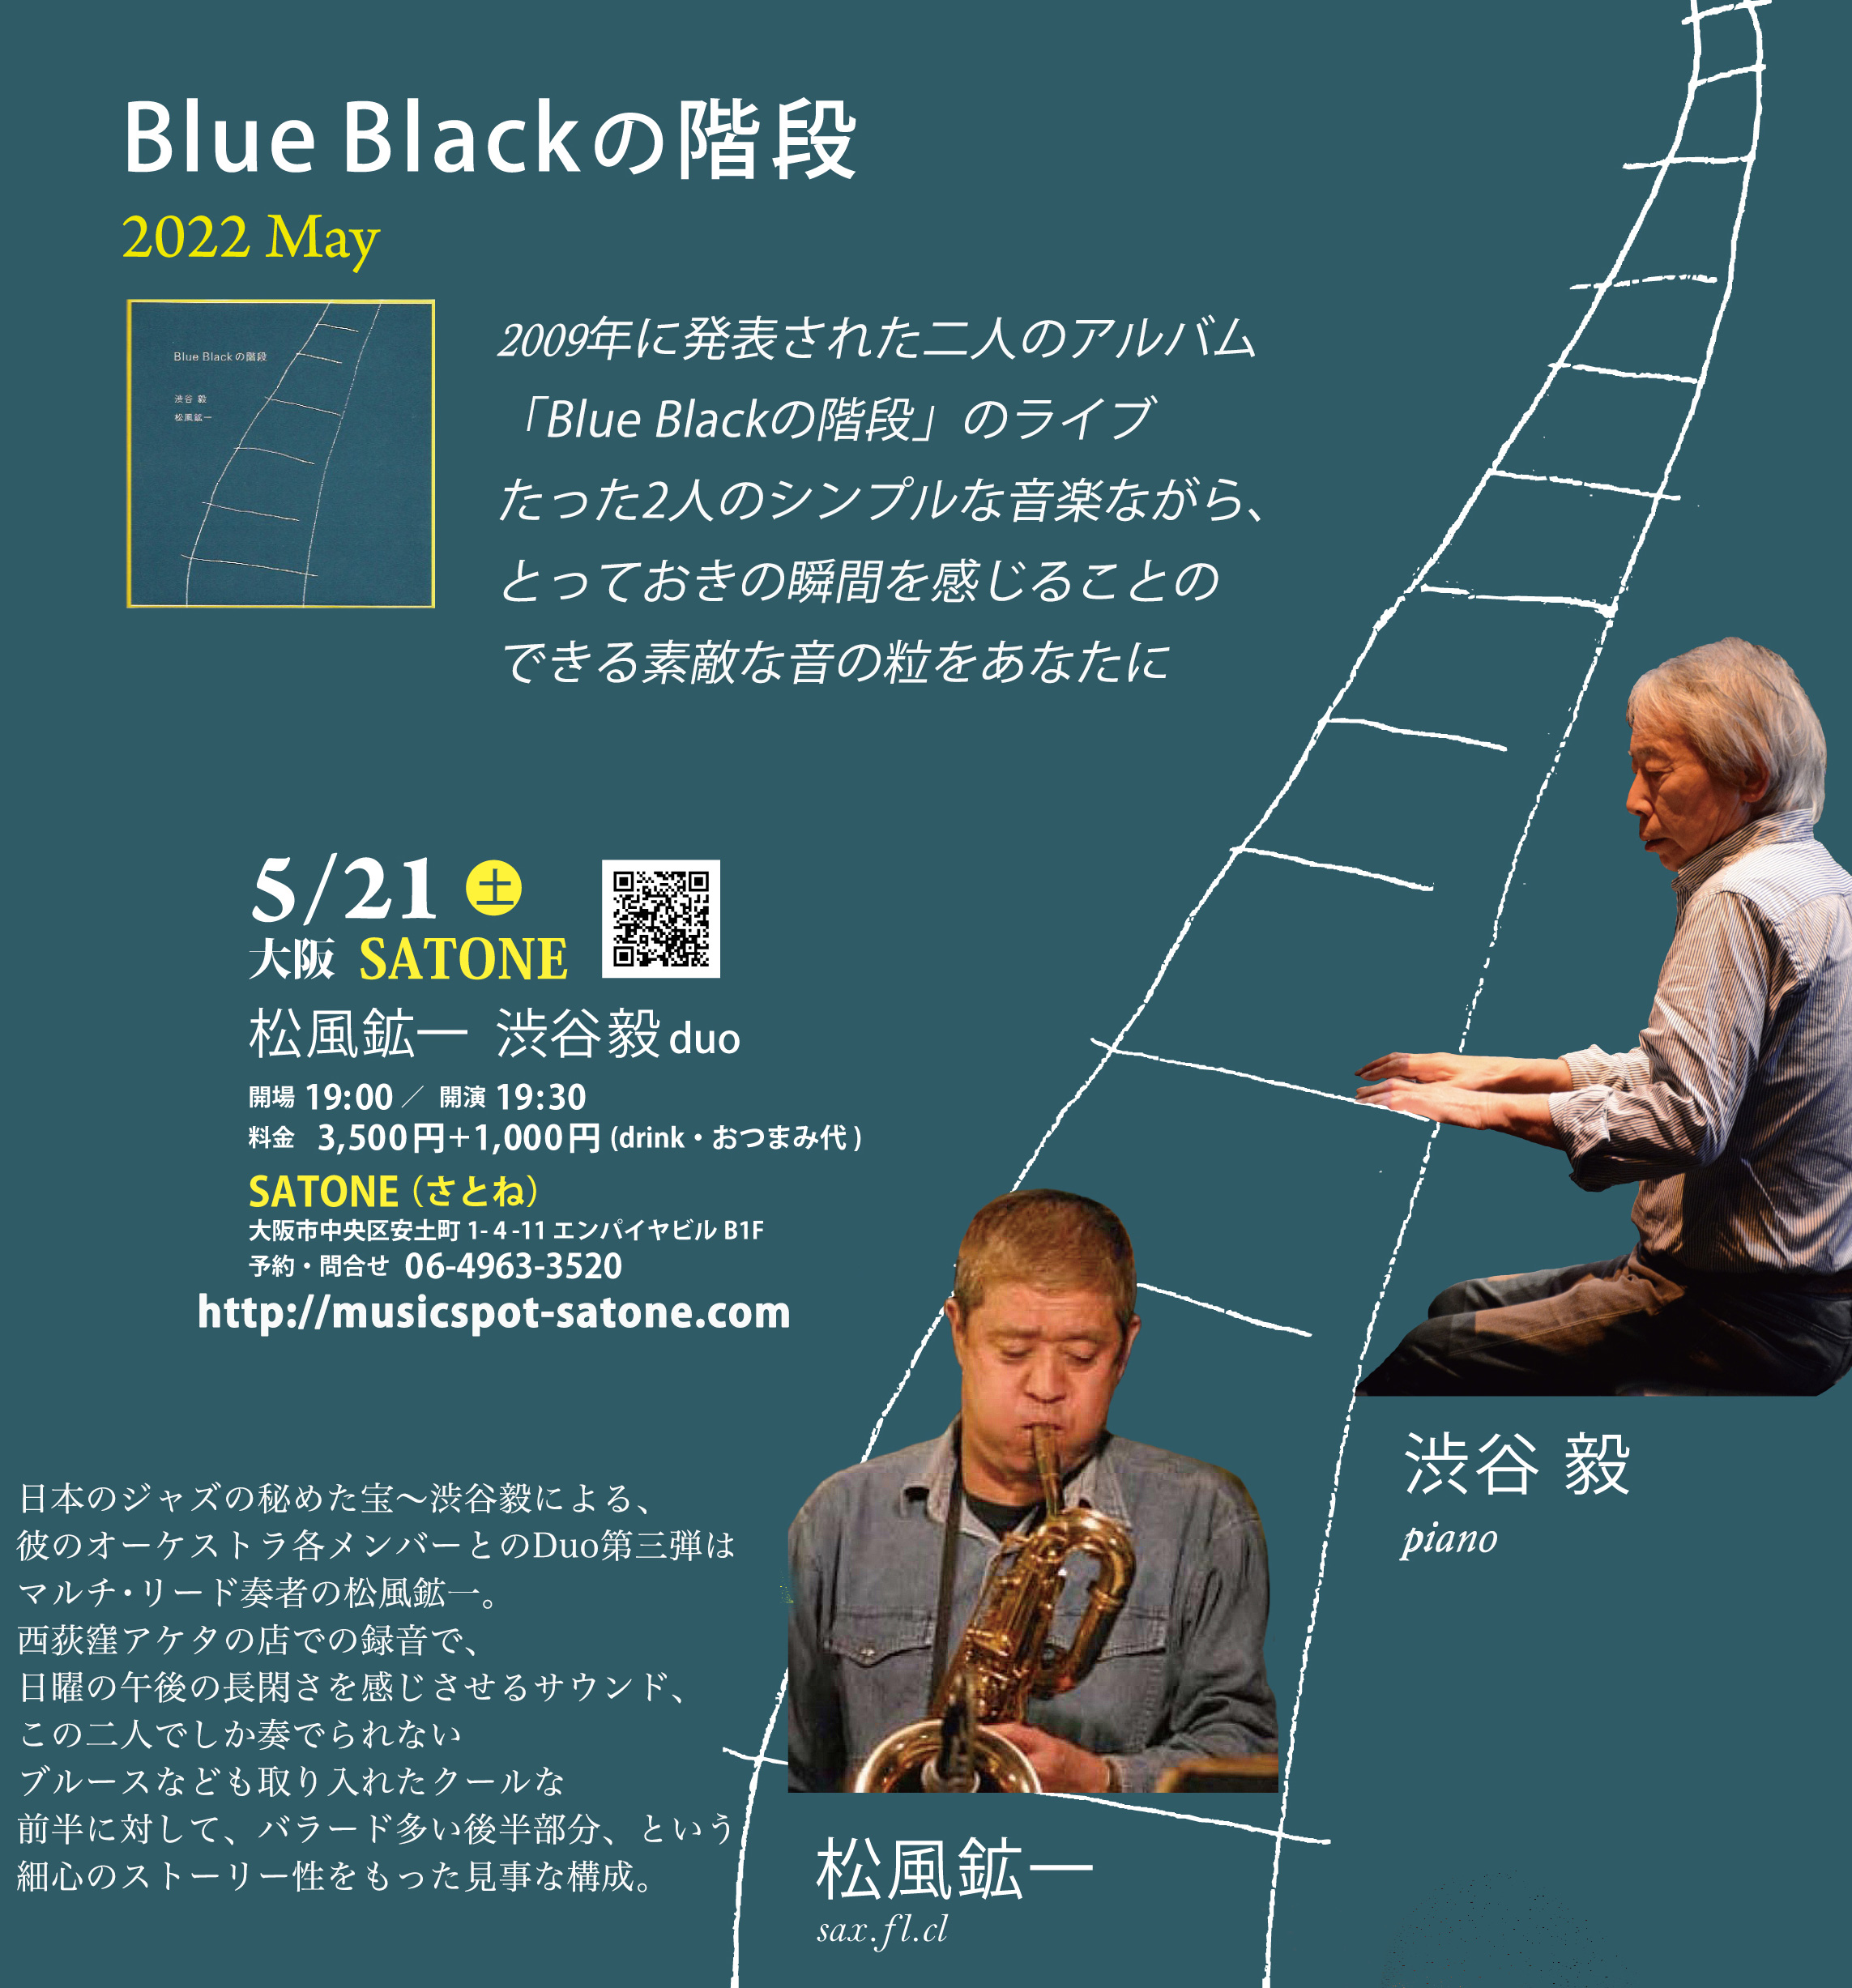 5/21（土）「Blue Blackの階段」 松風 鉱一  渋谷 毅  DUO